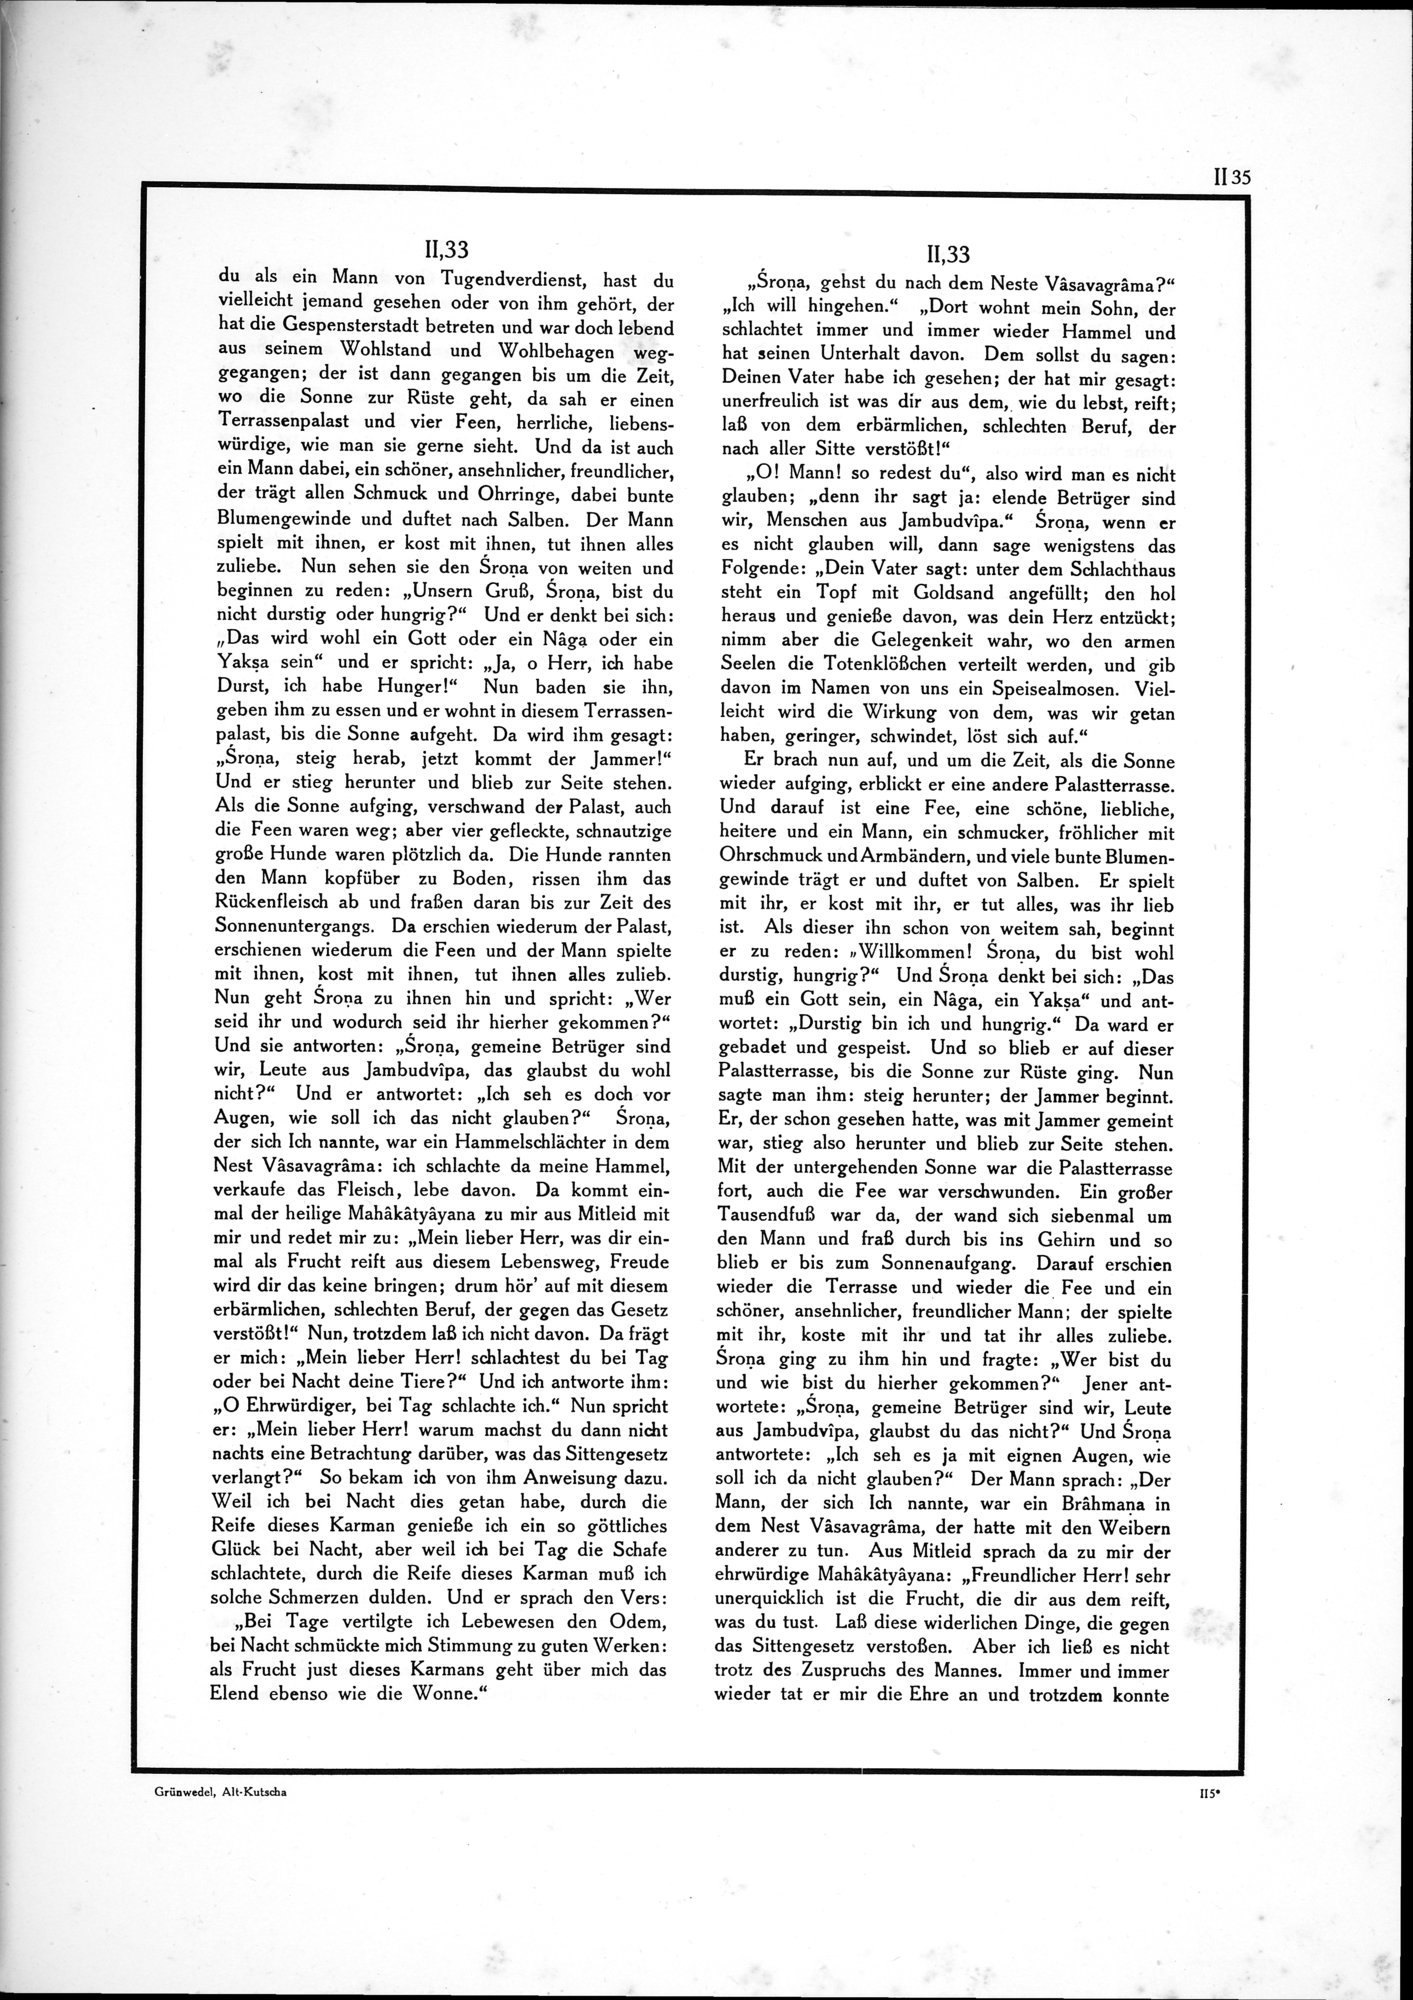 Alt-Kutscha : vol.1 / Page 141 (Grayscale High Resolution Image)